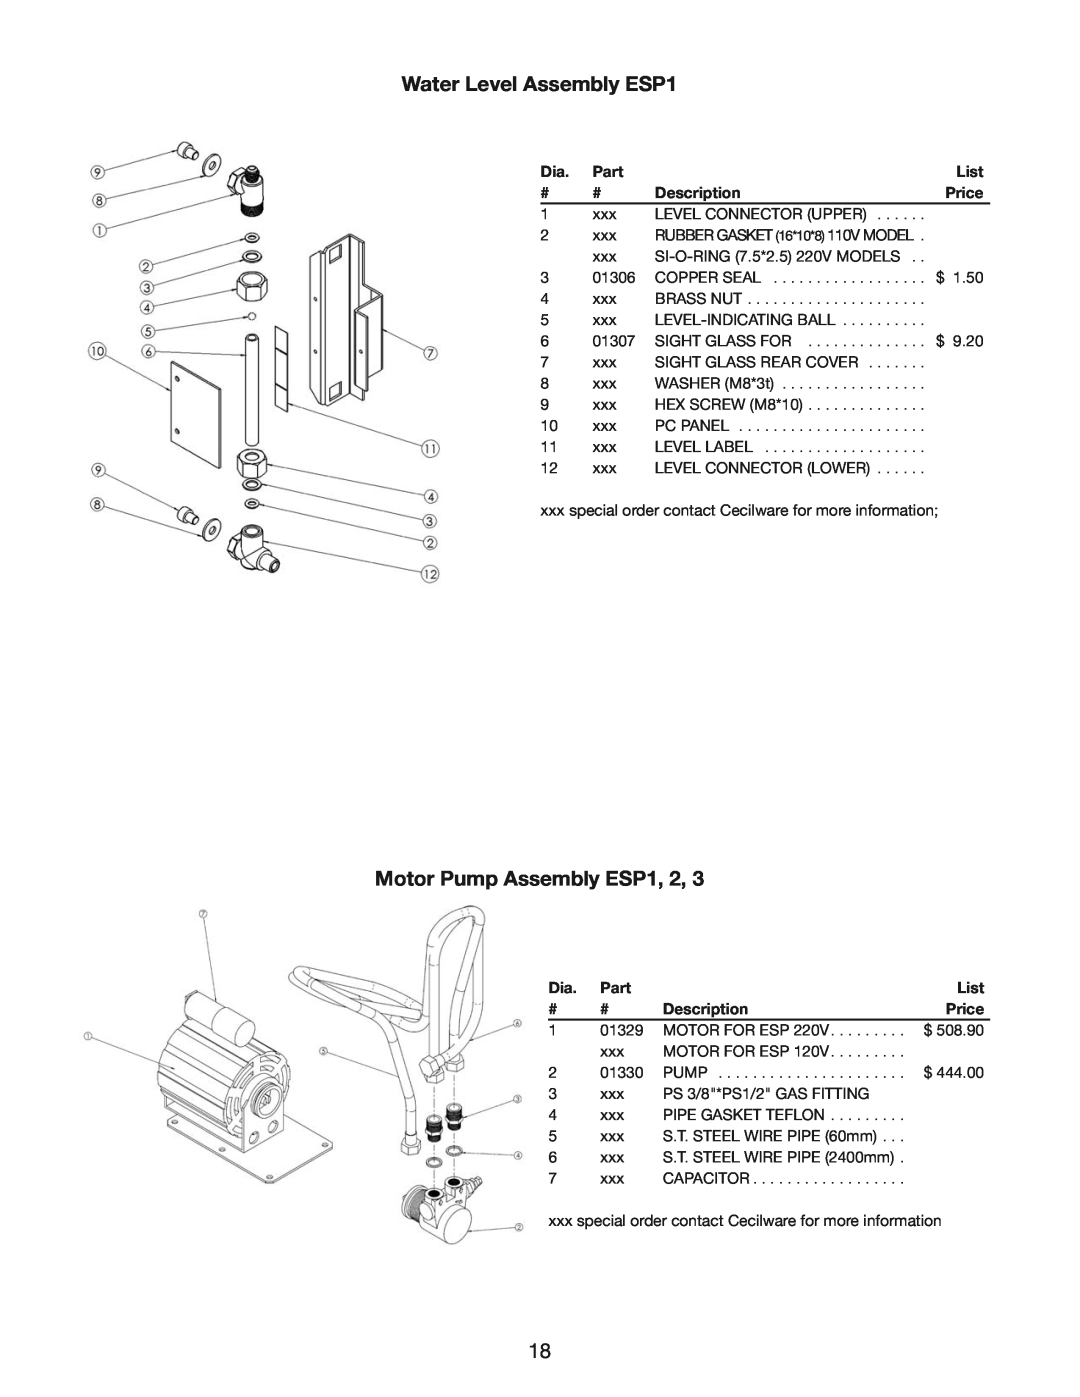 Cecilware ESP3 Water Level Assembly ESP1, Motor Pump Assembly ESP1, Part, List, Description, Level Connector Upper, Price 